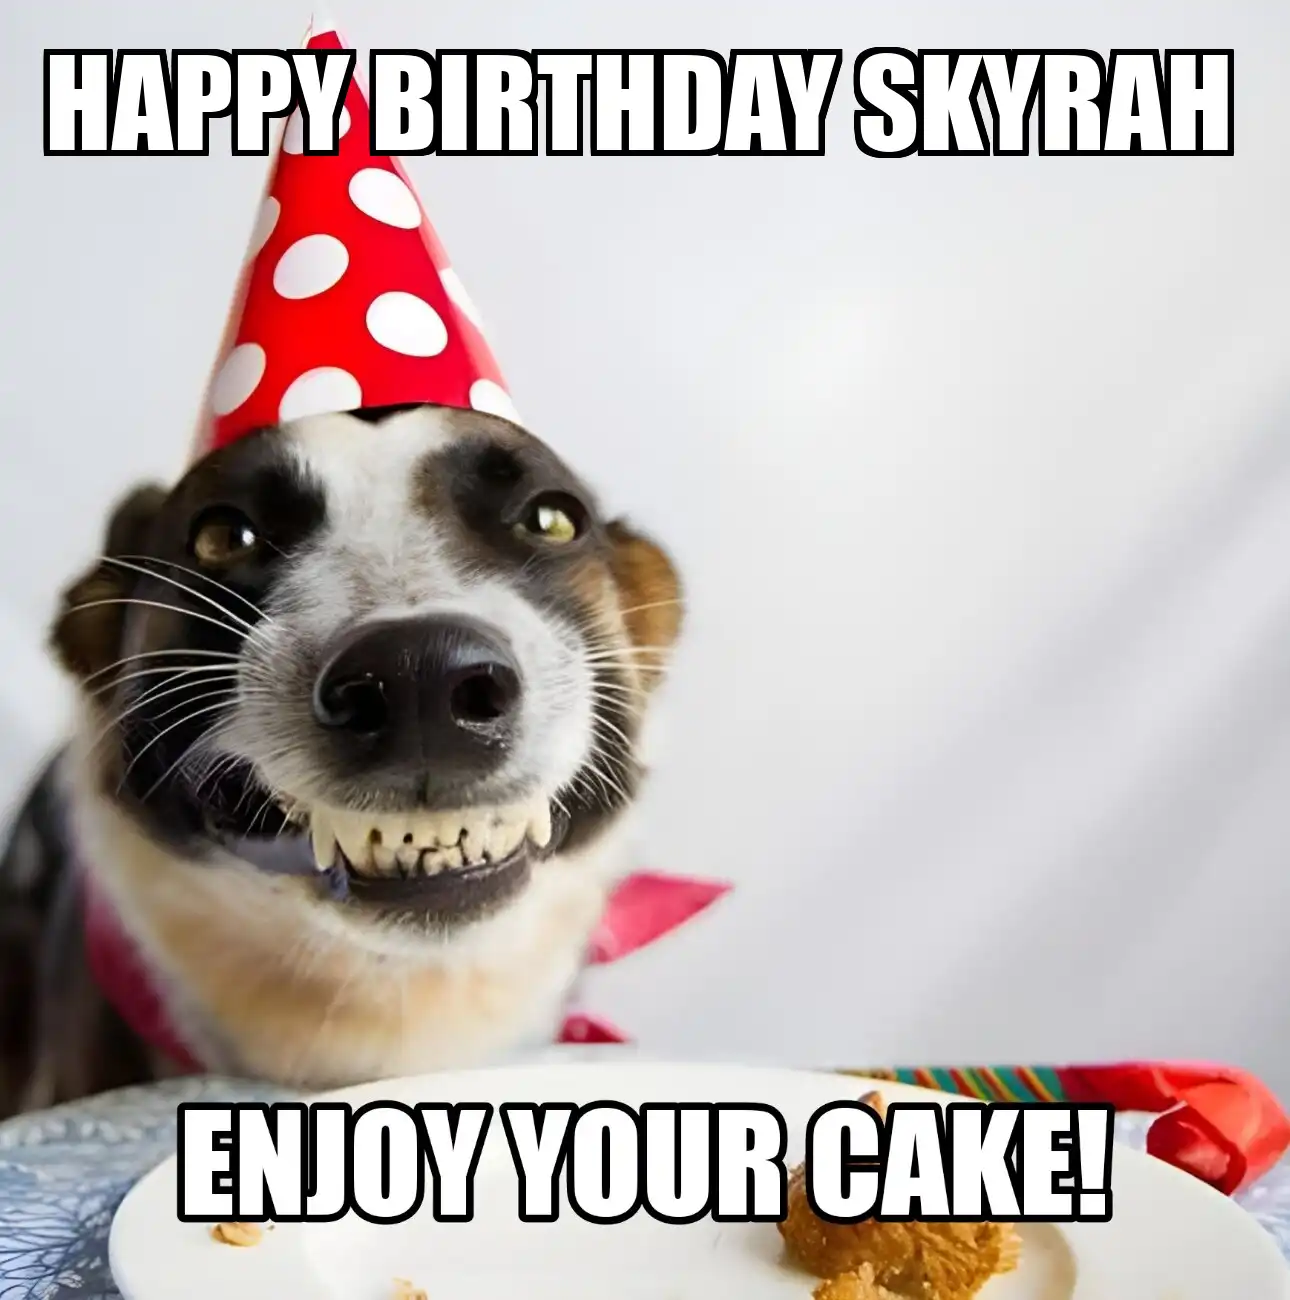 Happy Birthday Skyrah Enjoy Your Cake Dog Meme